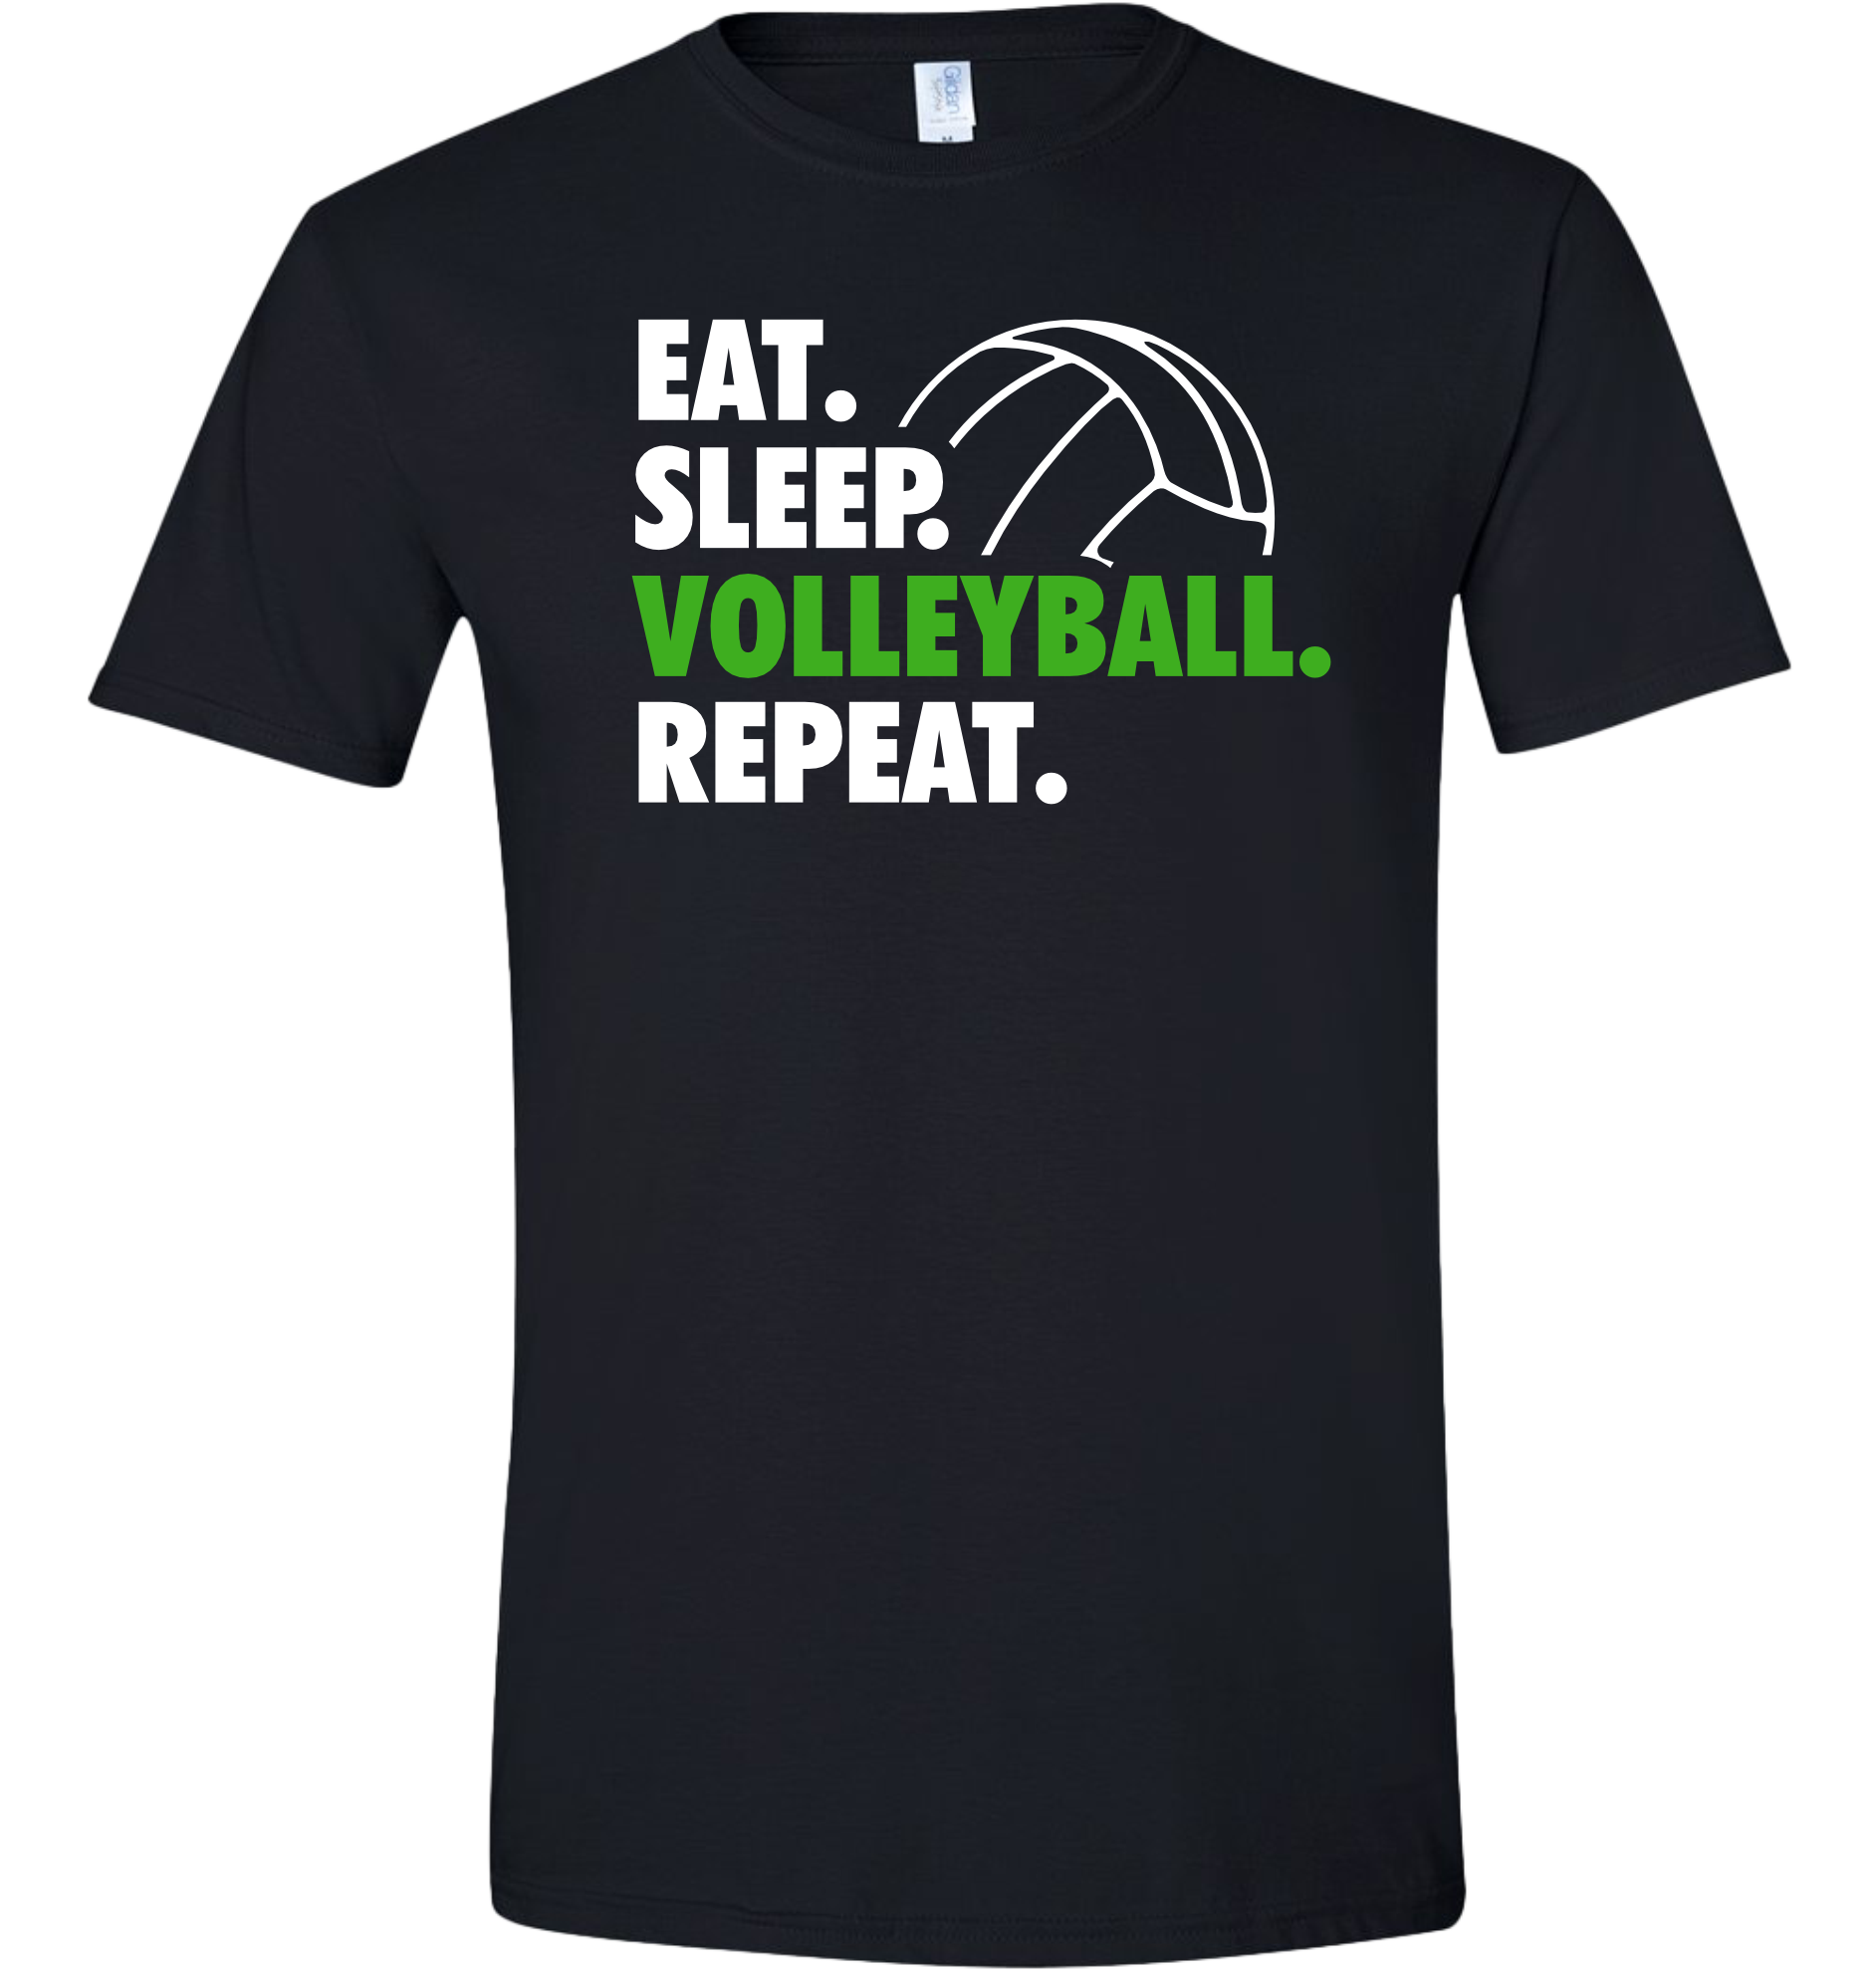 Eat. Sleep. VOLLEYBALL. Repeat. T-Shirt